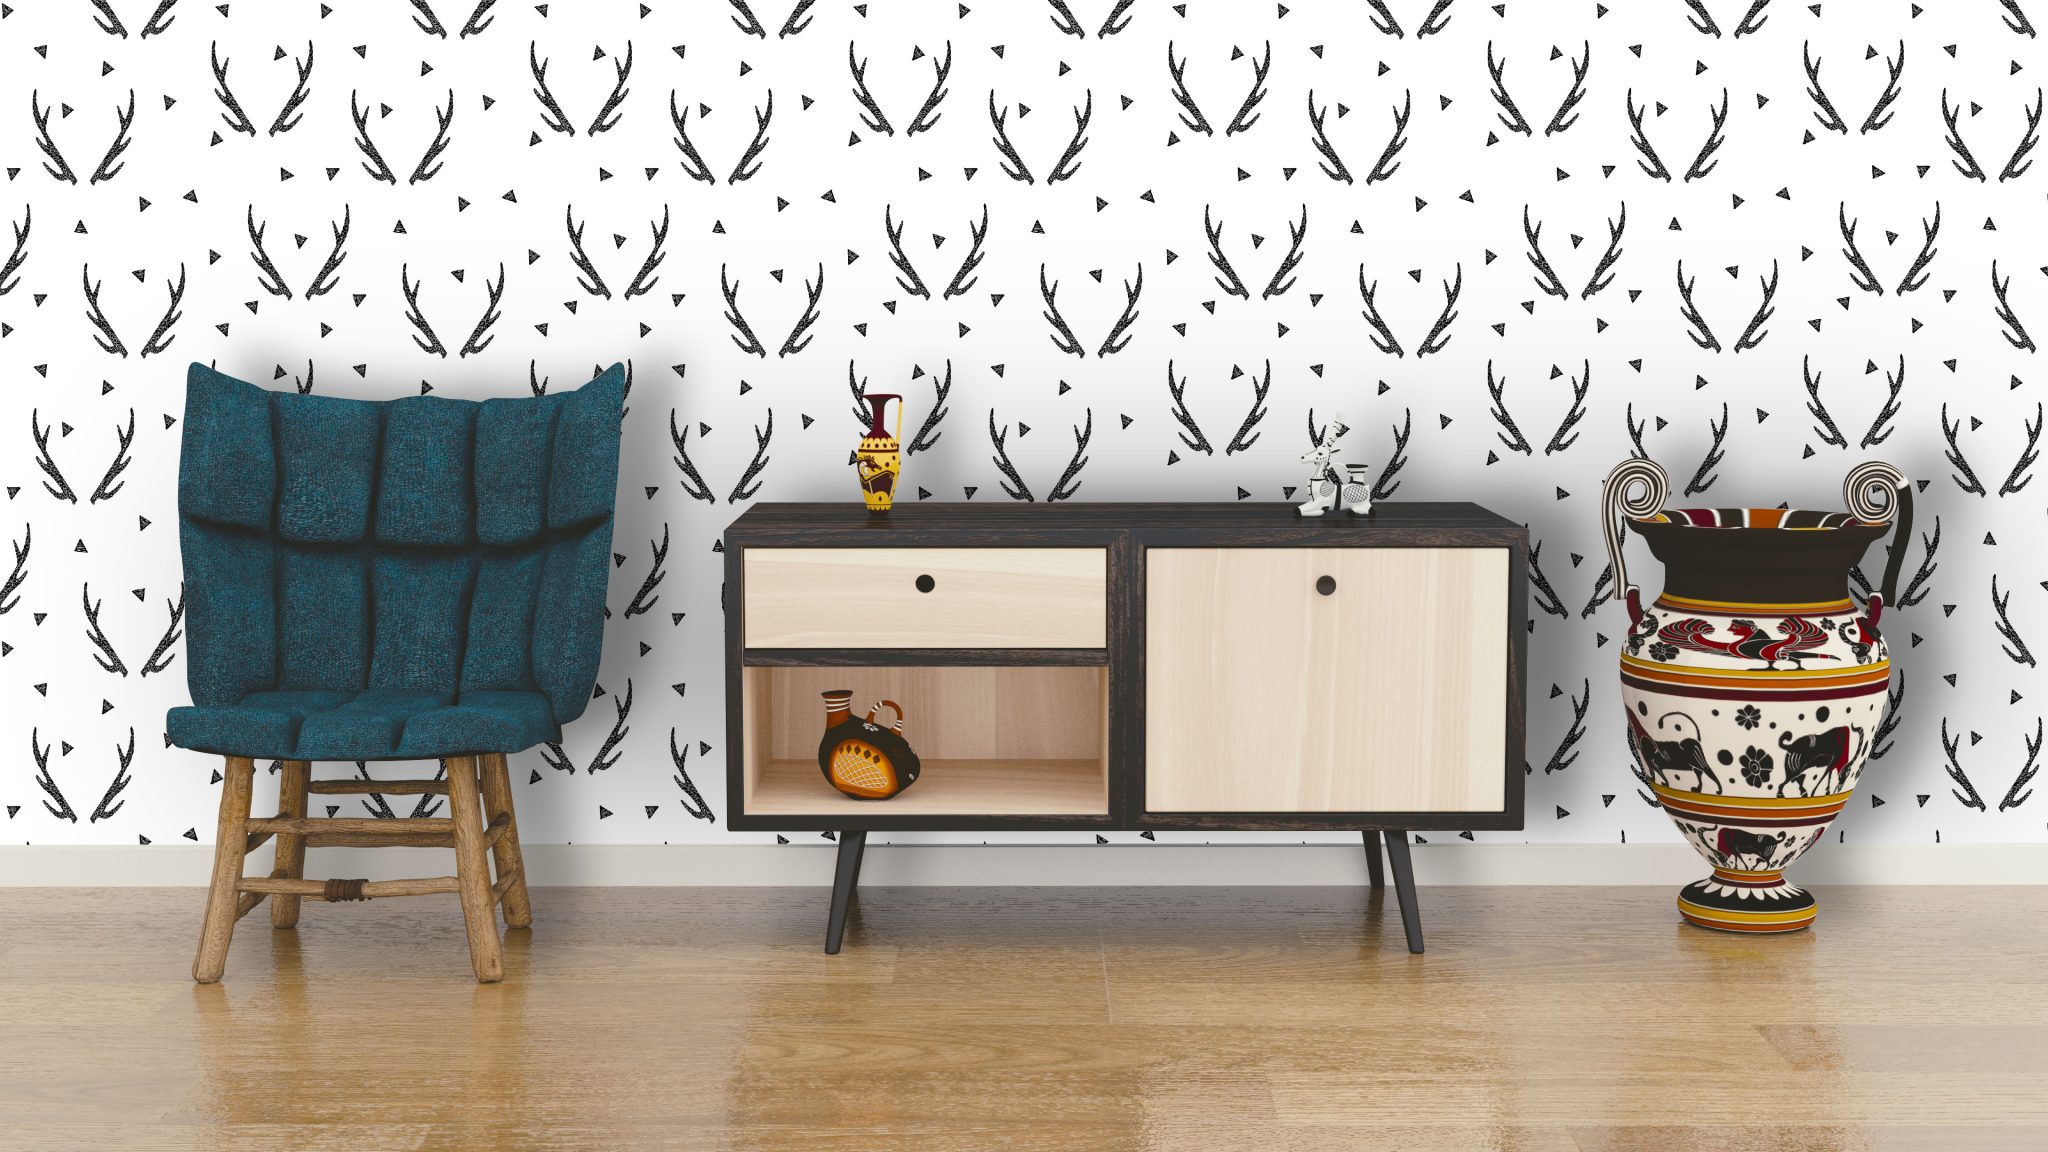 Antlers - 家具 写真 素材 フリー , HD Wallpaper & Backgrounds